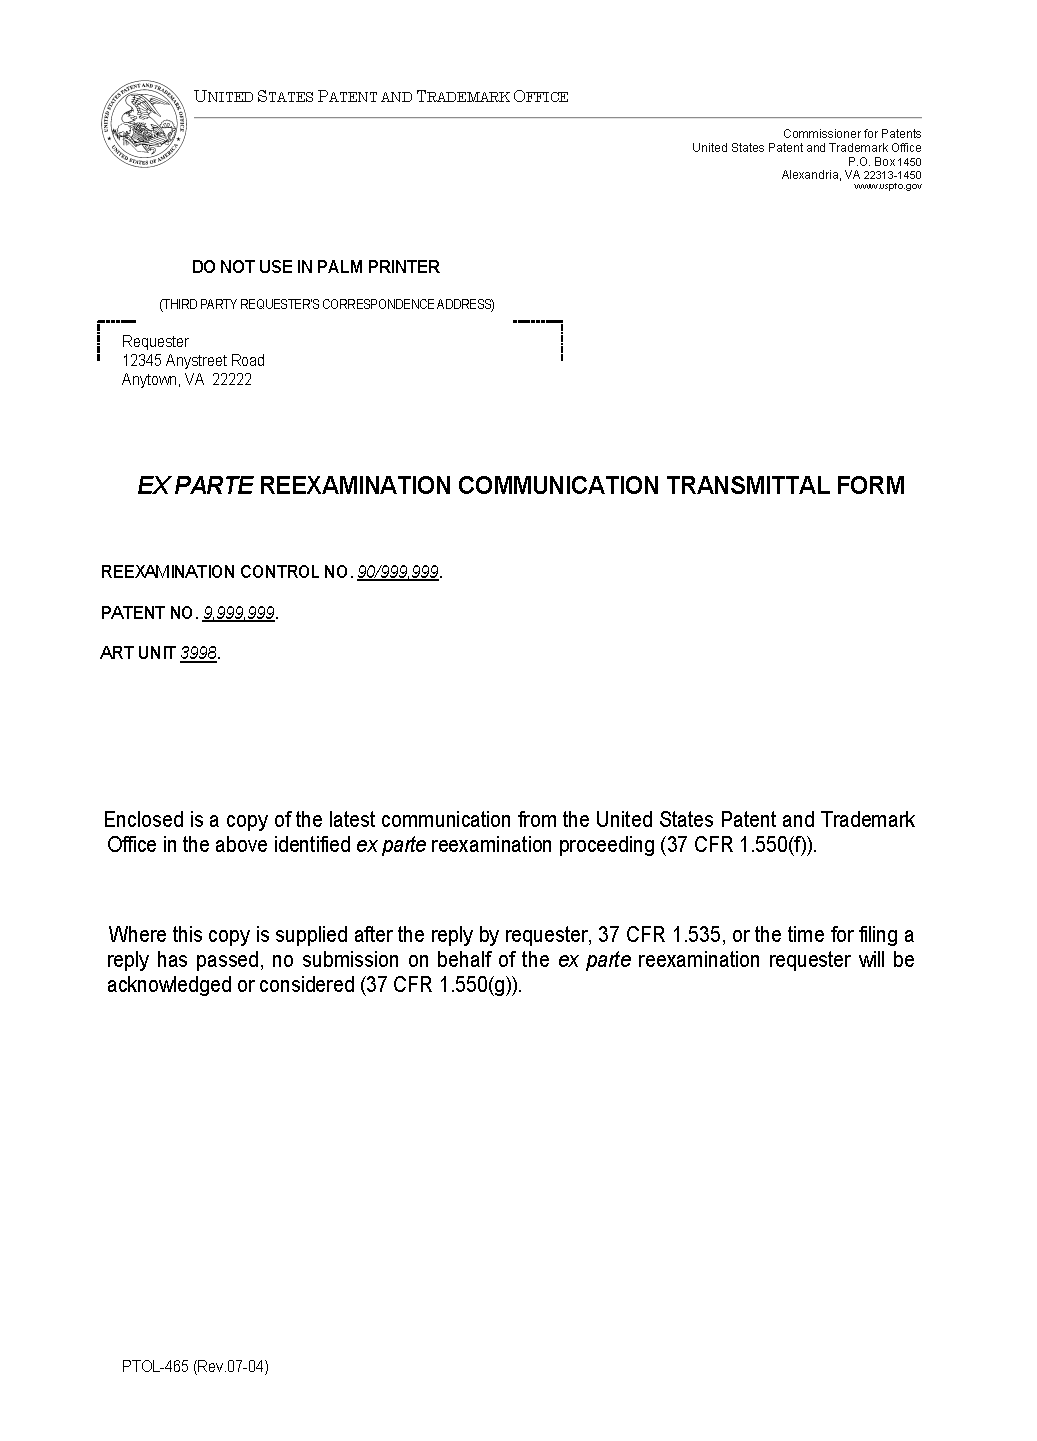 Form PTOL-465. Ex Parte Reexamination Communication Transmittal Form